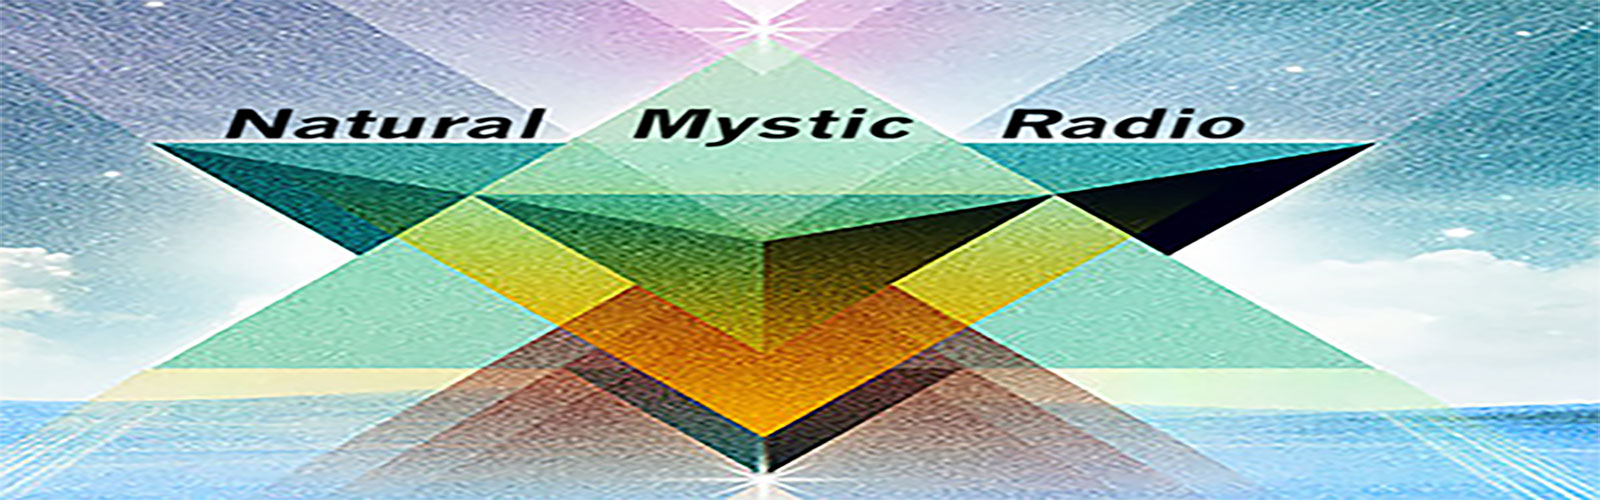 Natural Mystic Radio